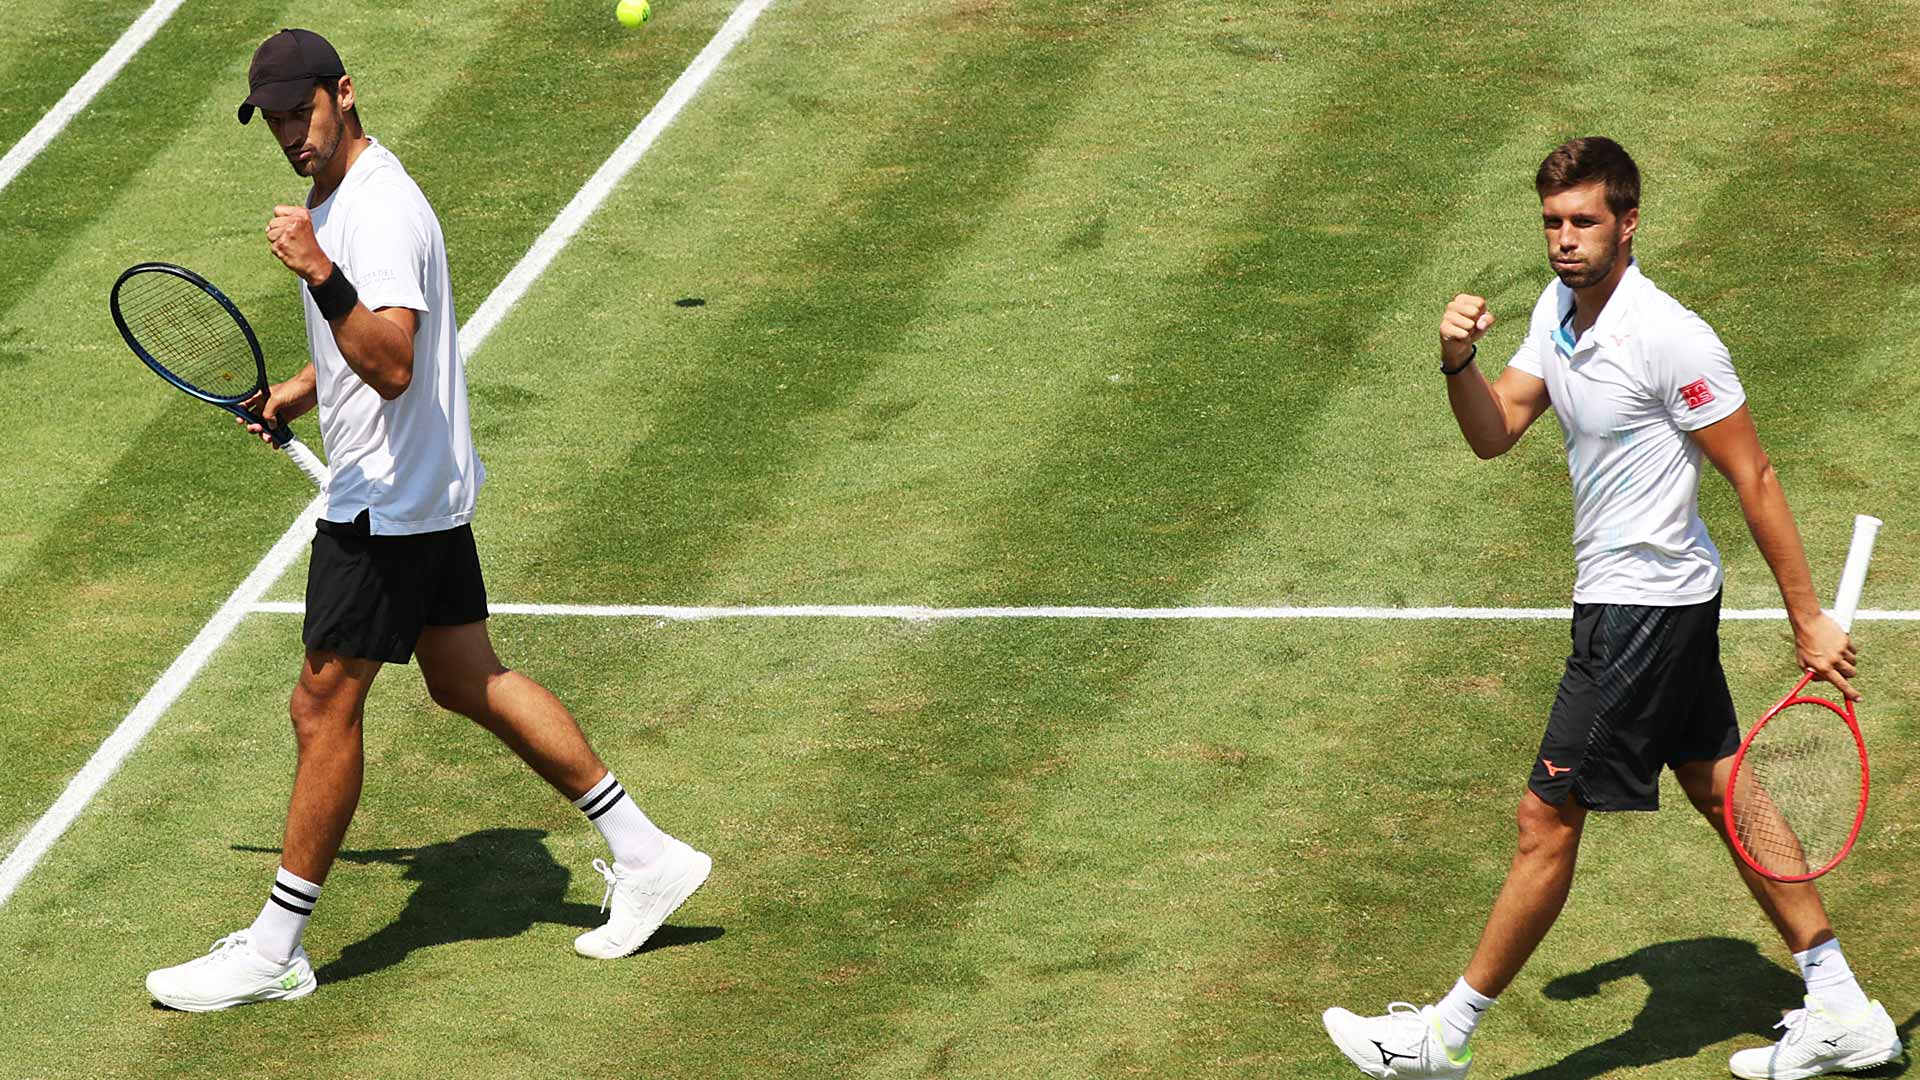 Mektic/Pavic Make Winning Start at Wimbledon ATP Tour Tennis